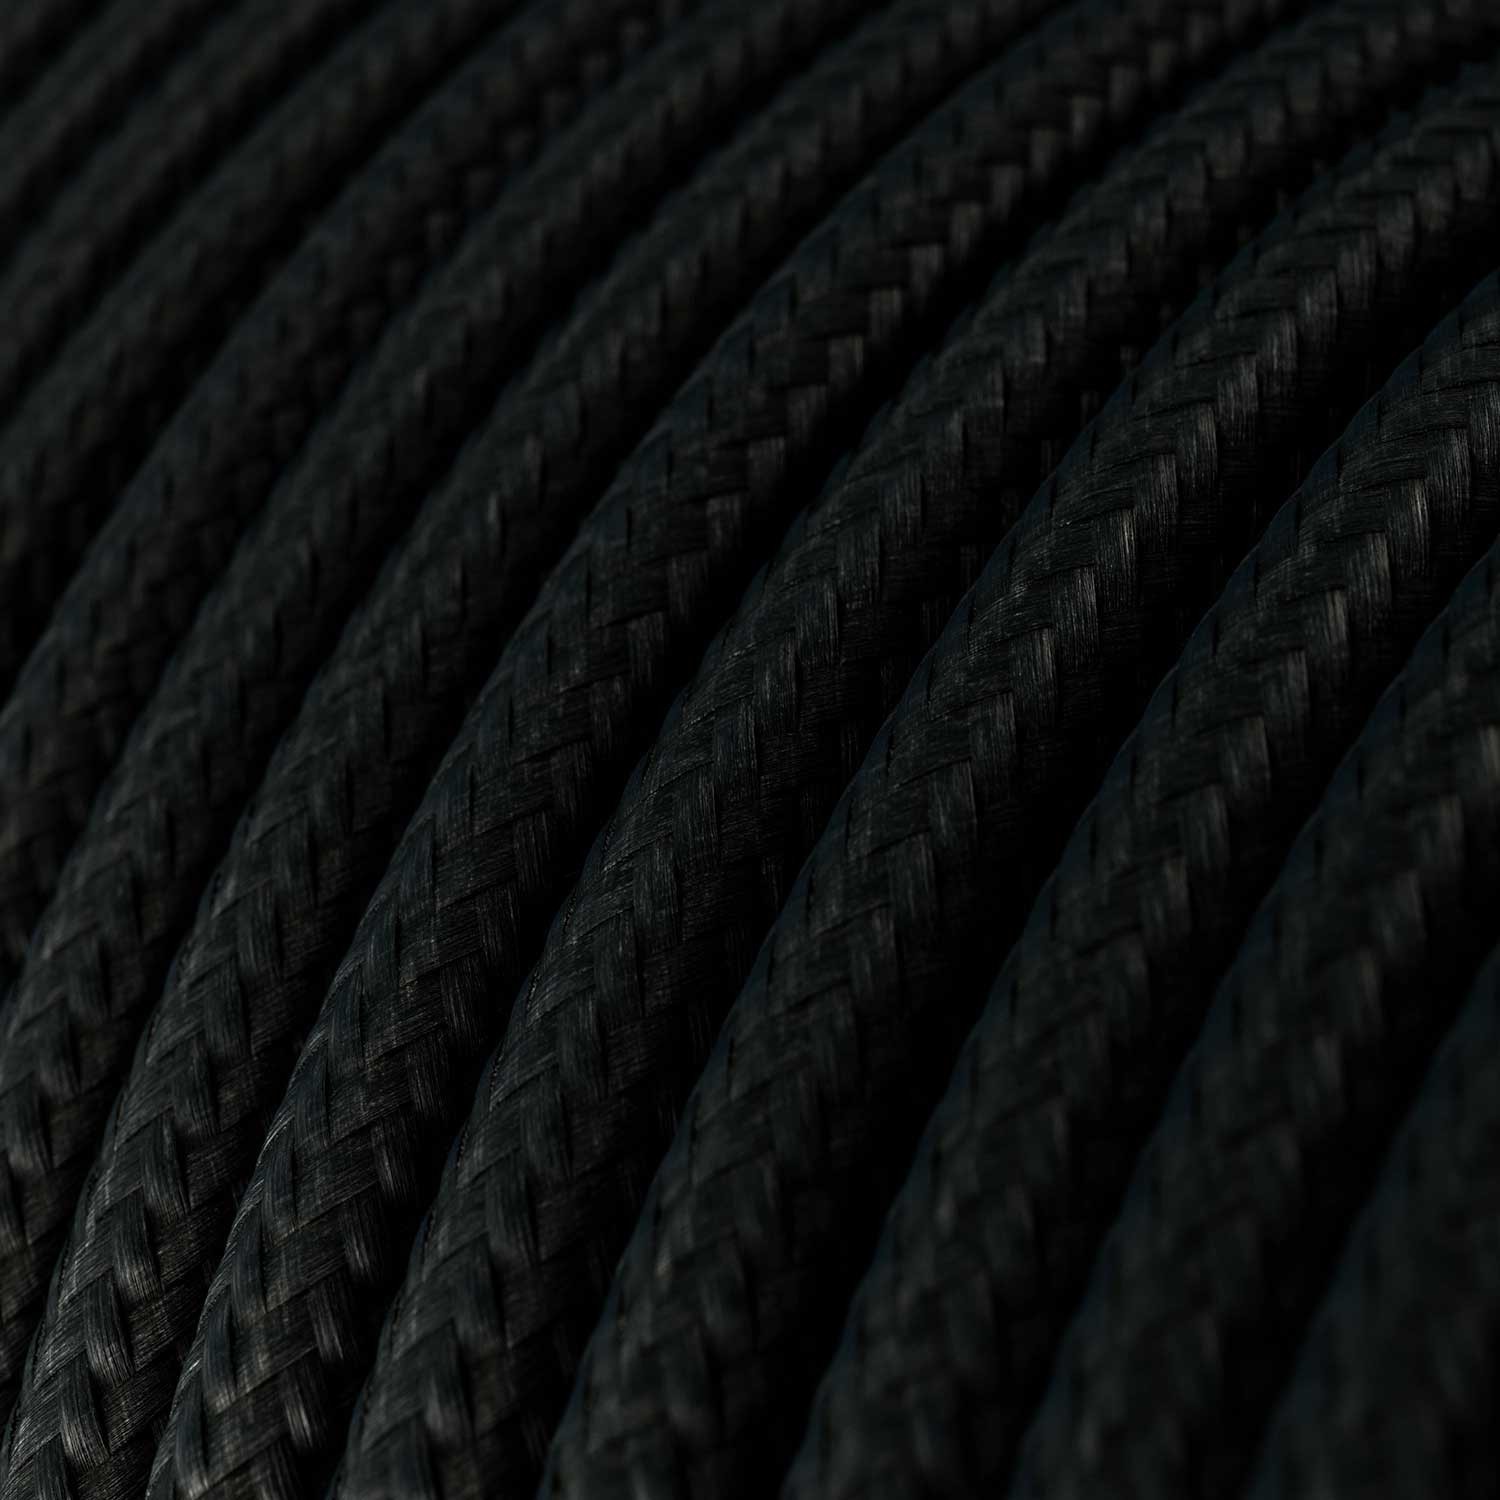 Extra mäkký silikónový elektrický kábel s lesklou látkovou podšívkou Charcoal Black - RM04 okrúhly 2x0,75 mm